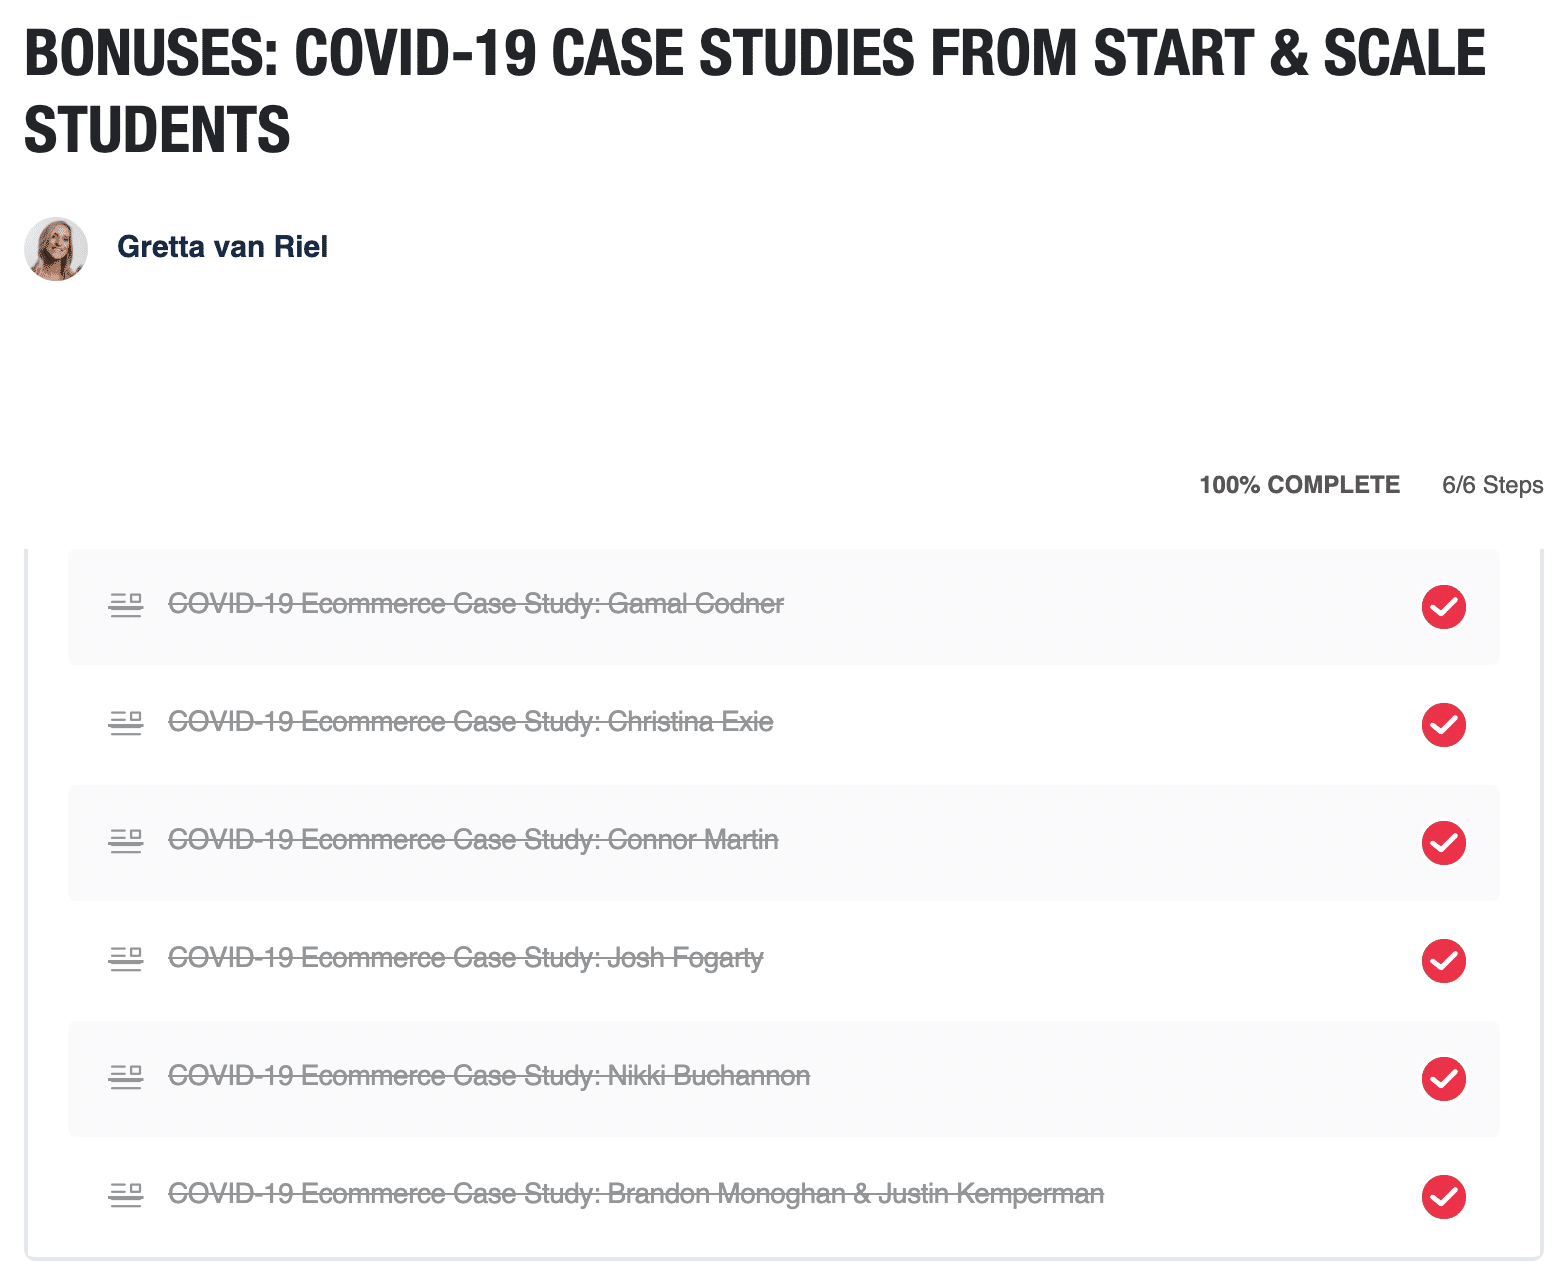 BONUS 2: COVID-19 Case Studies from Start & Scale Students